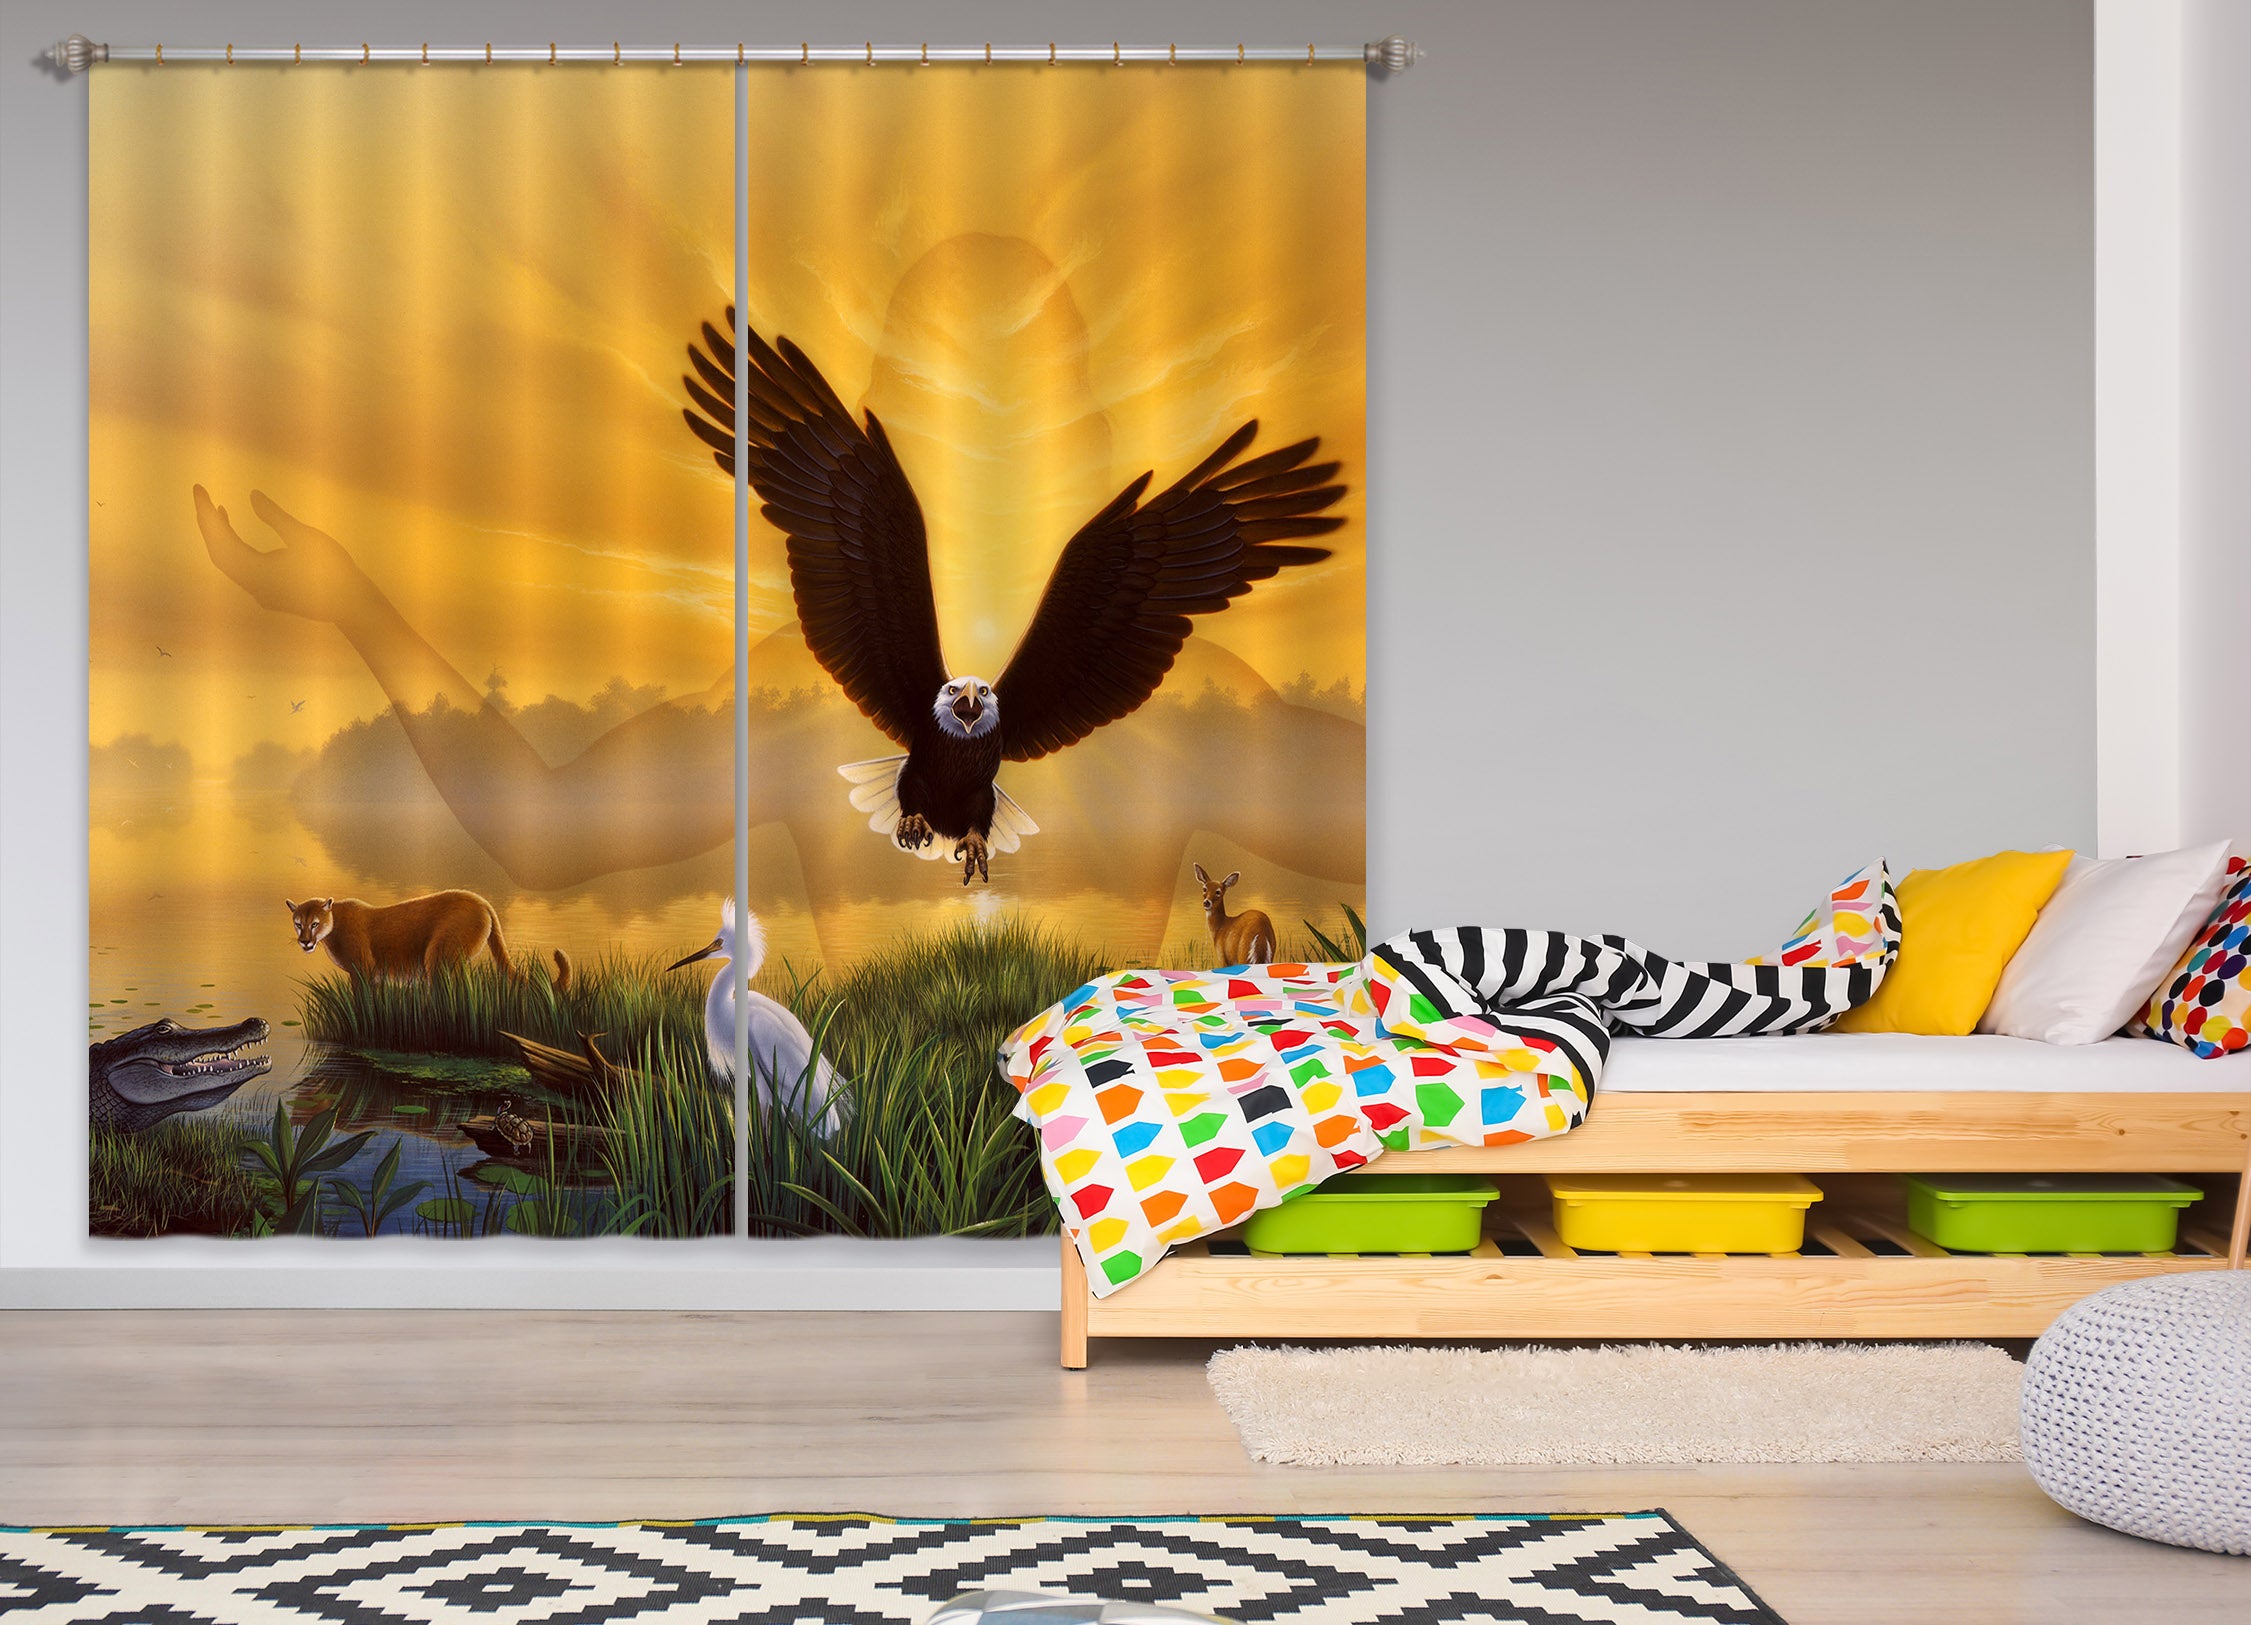 3D Flying Eagle 86098 Jerry LoFaro Curtain Curtains Drapes